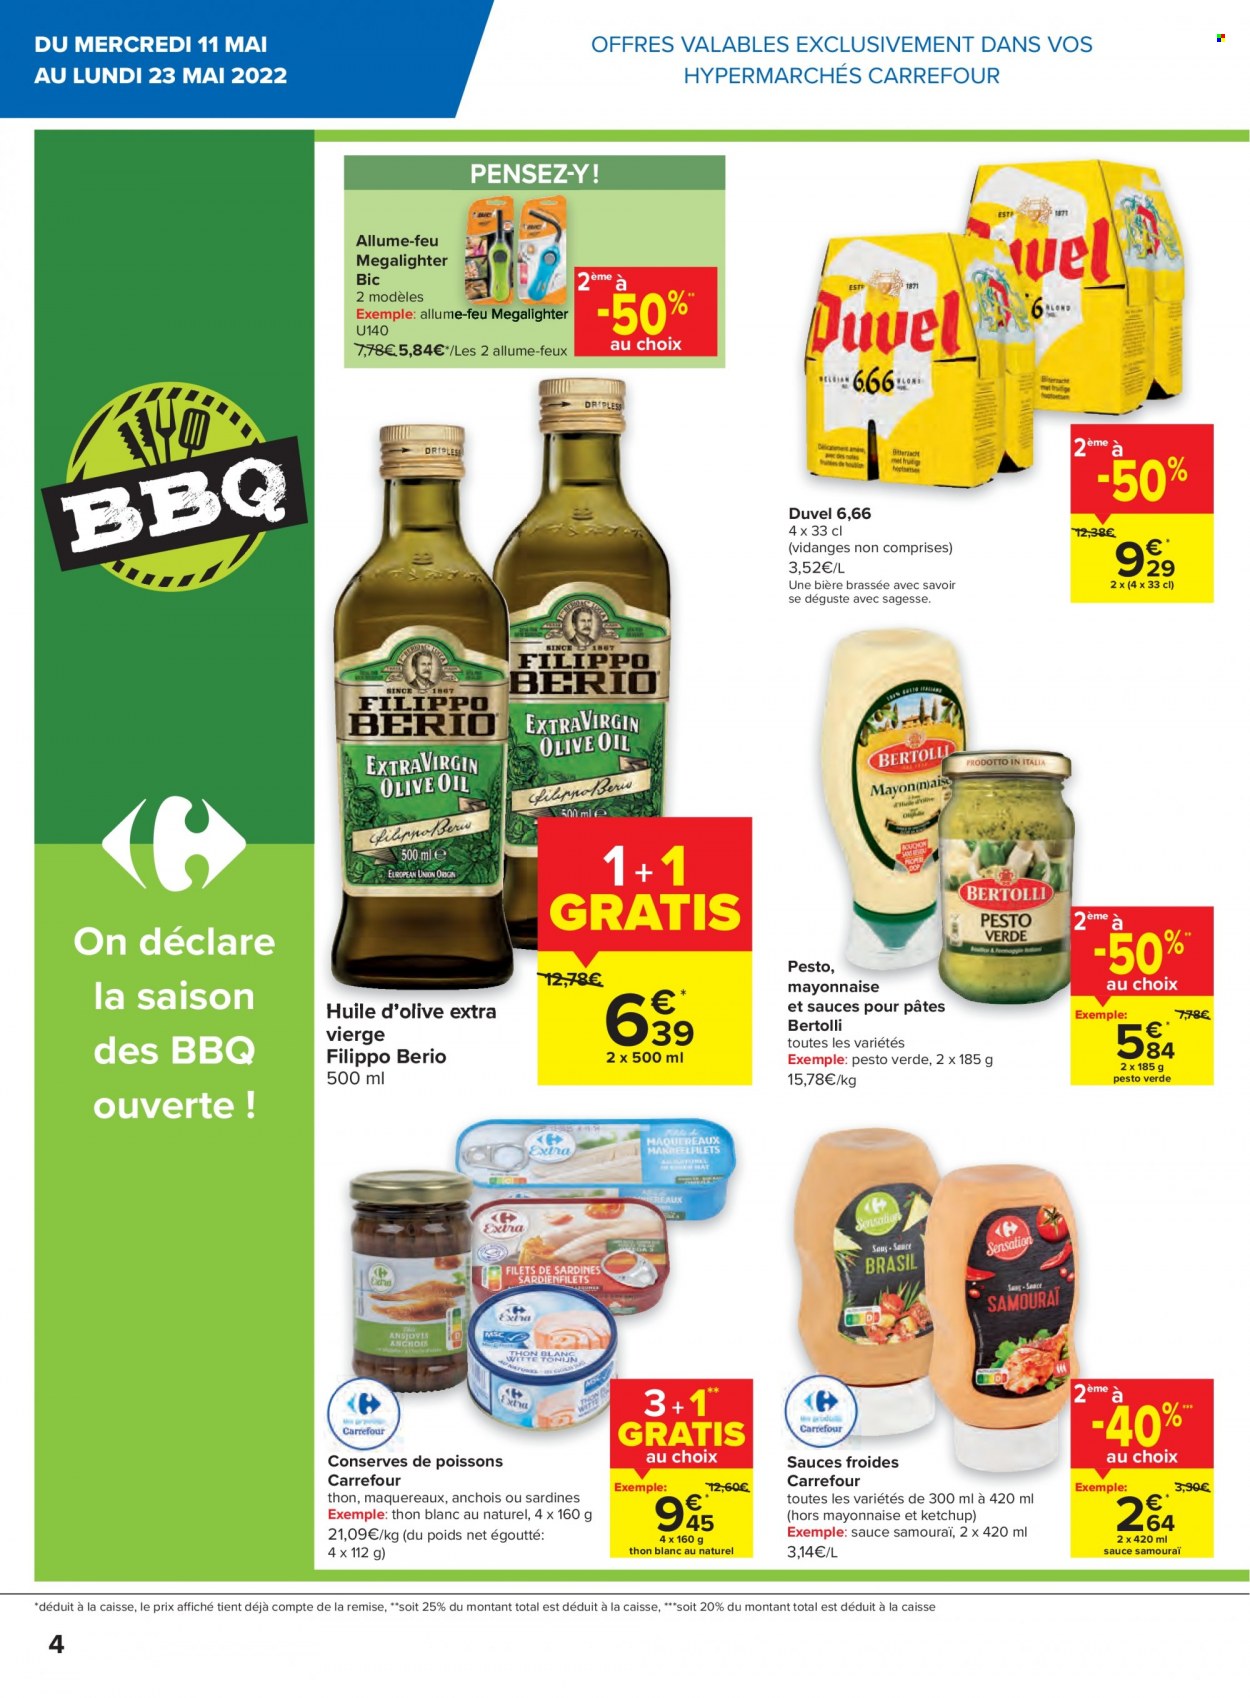 thumbnail - Carrefour hypermarkt-aanbieding - 11/05/2022 - 23/05/2022 -  producten in de aanbieding - Bertolli, pesto, BBQ, Bic. Pagina 4.